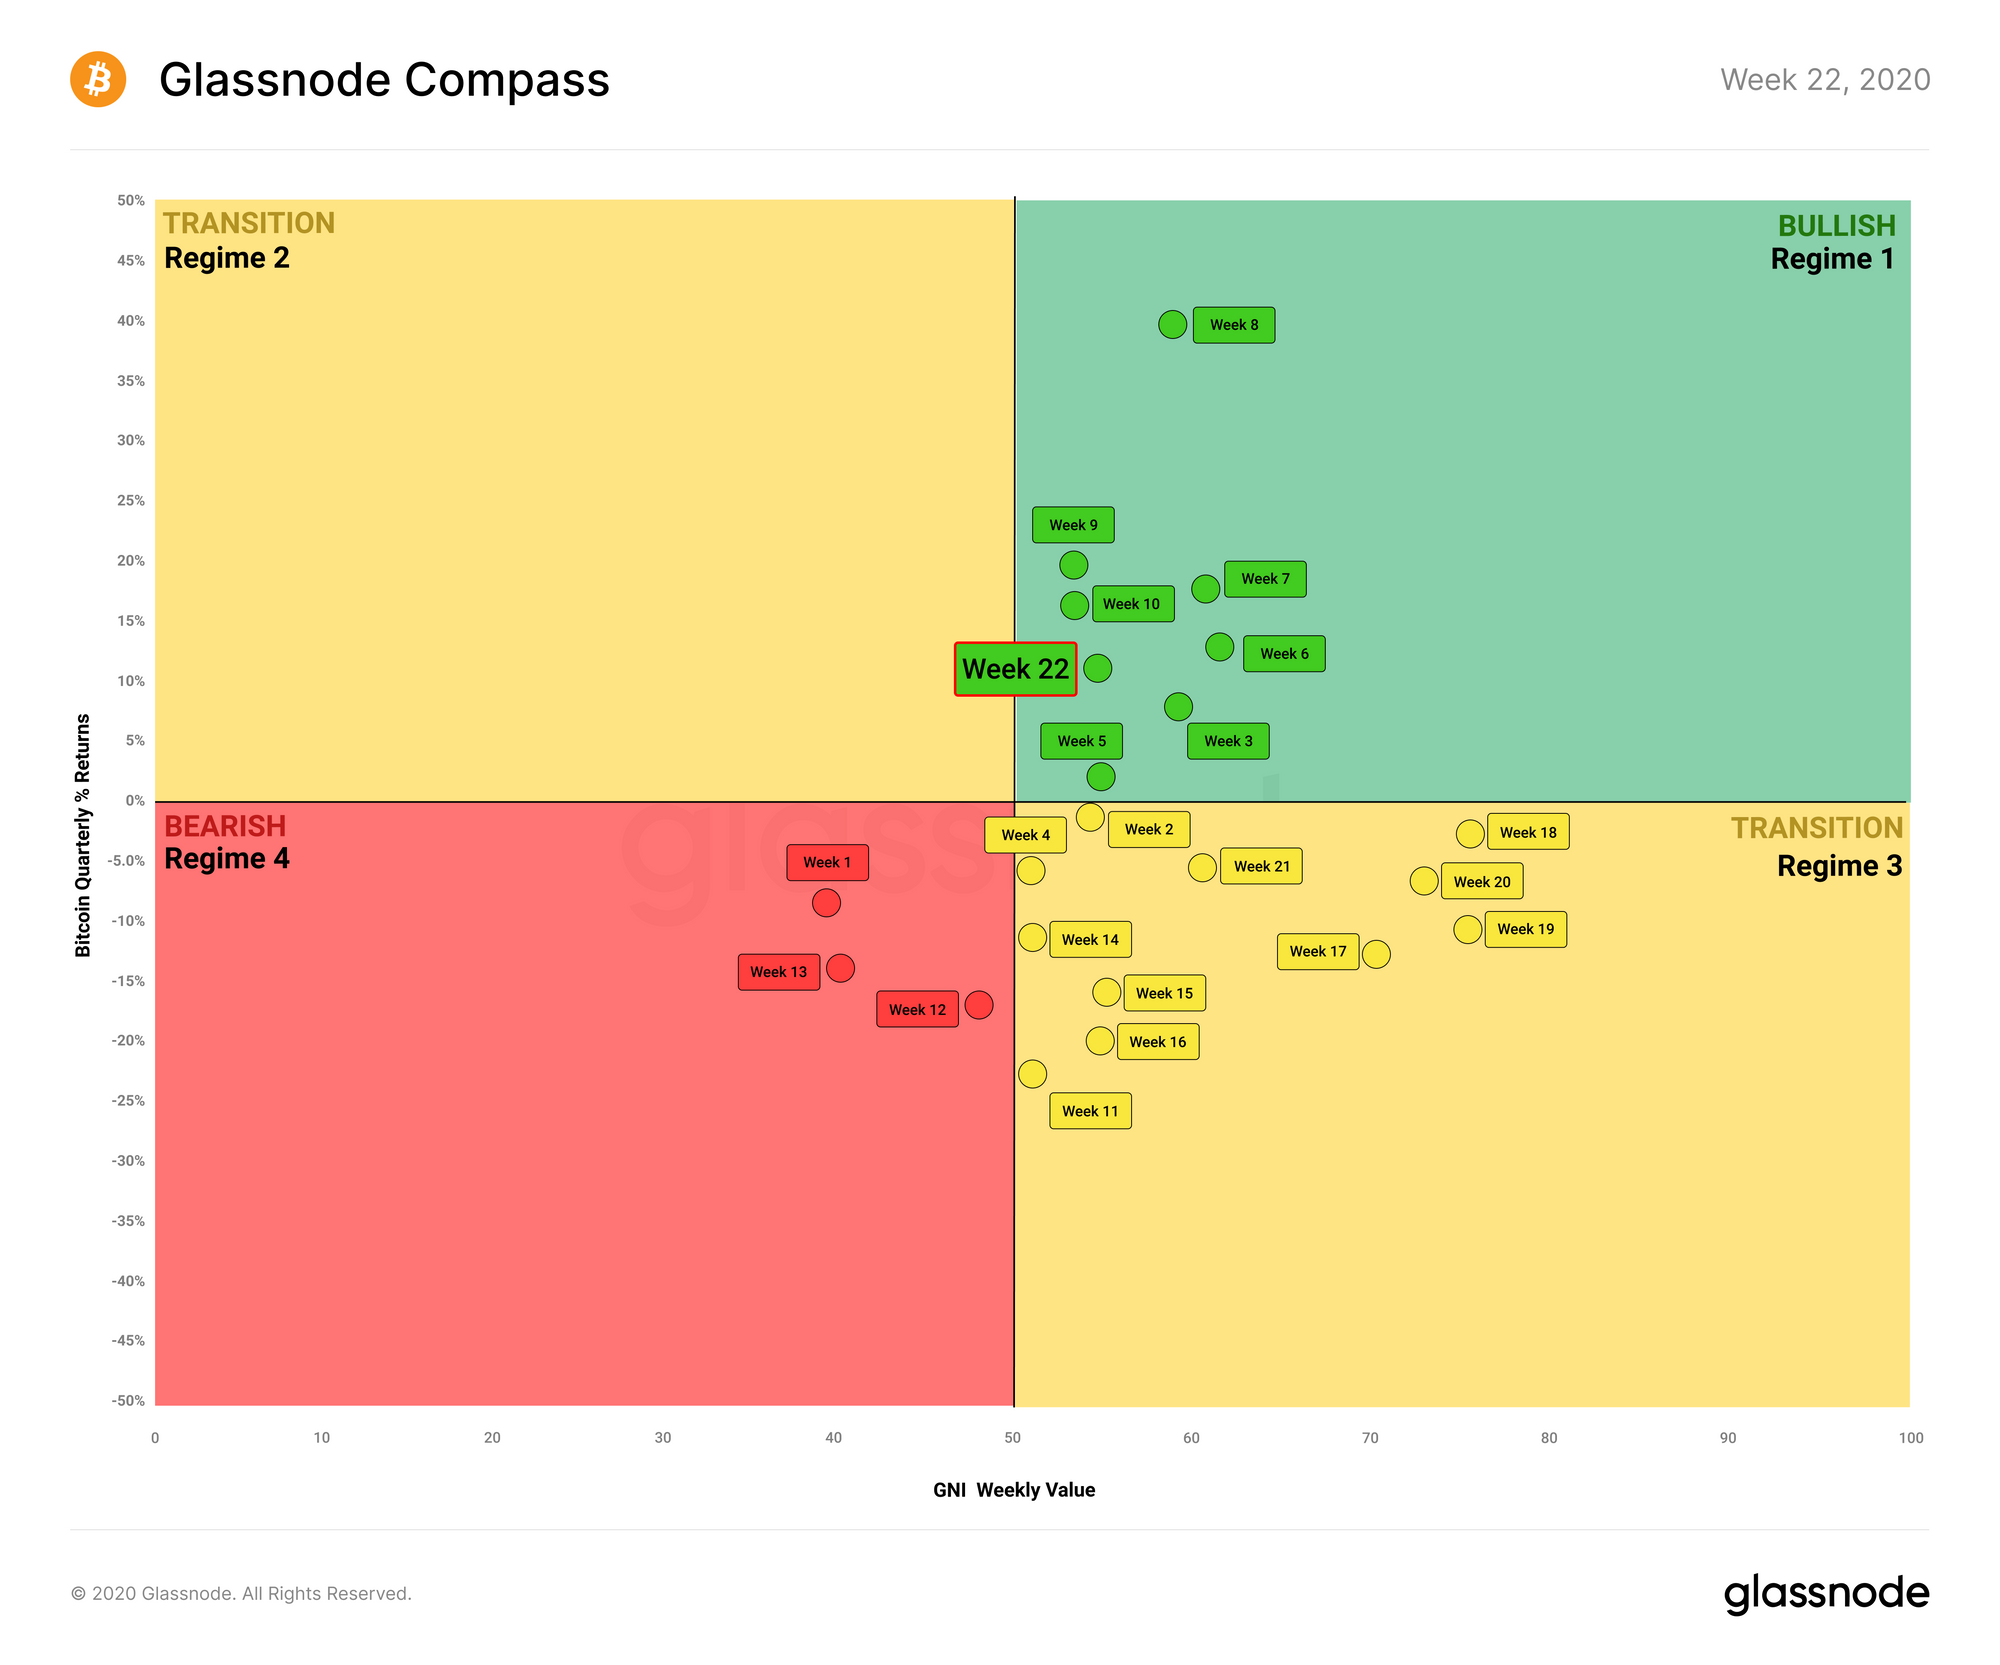 Glassnode's Compass Index